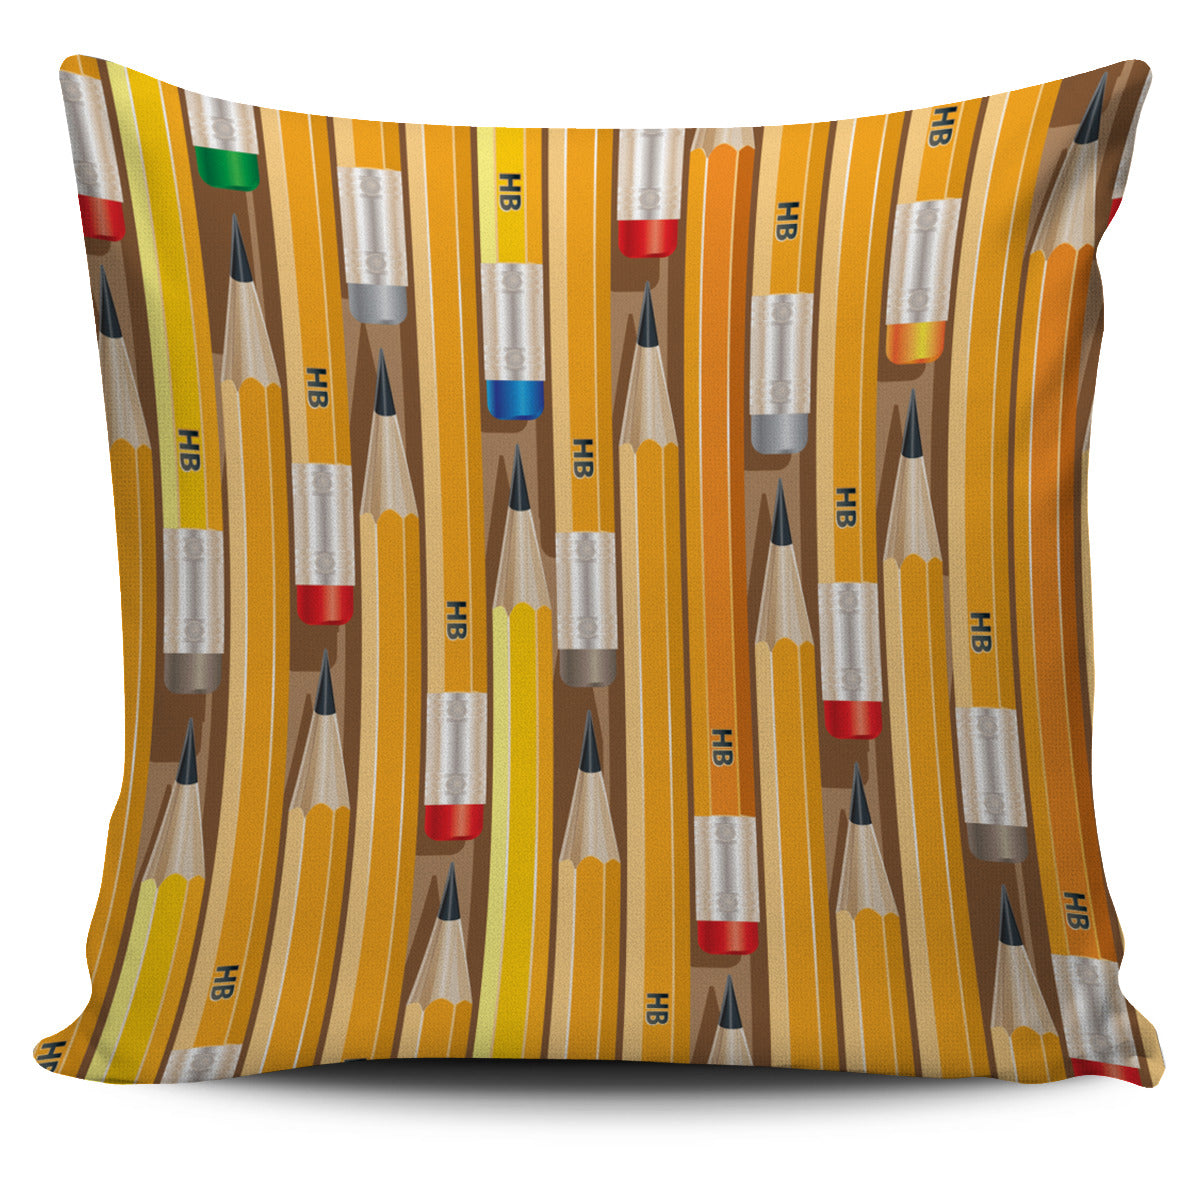 HB Pencils Pillow Cover